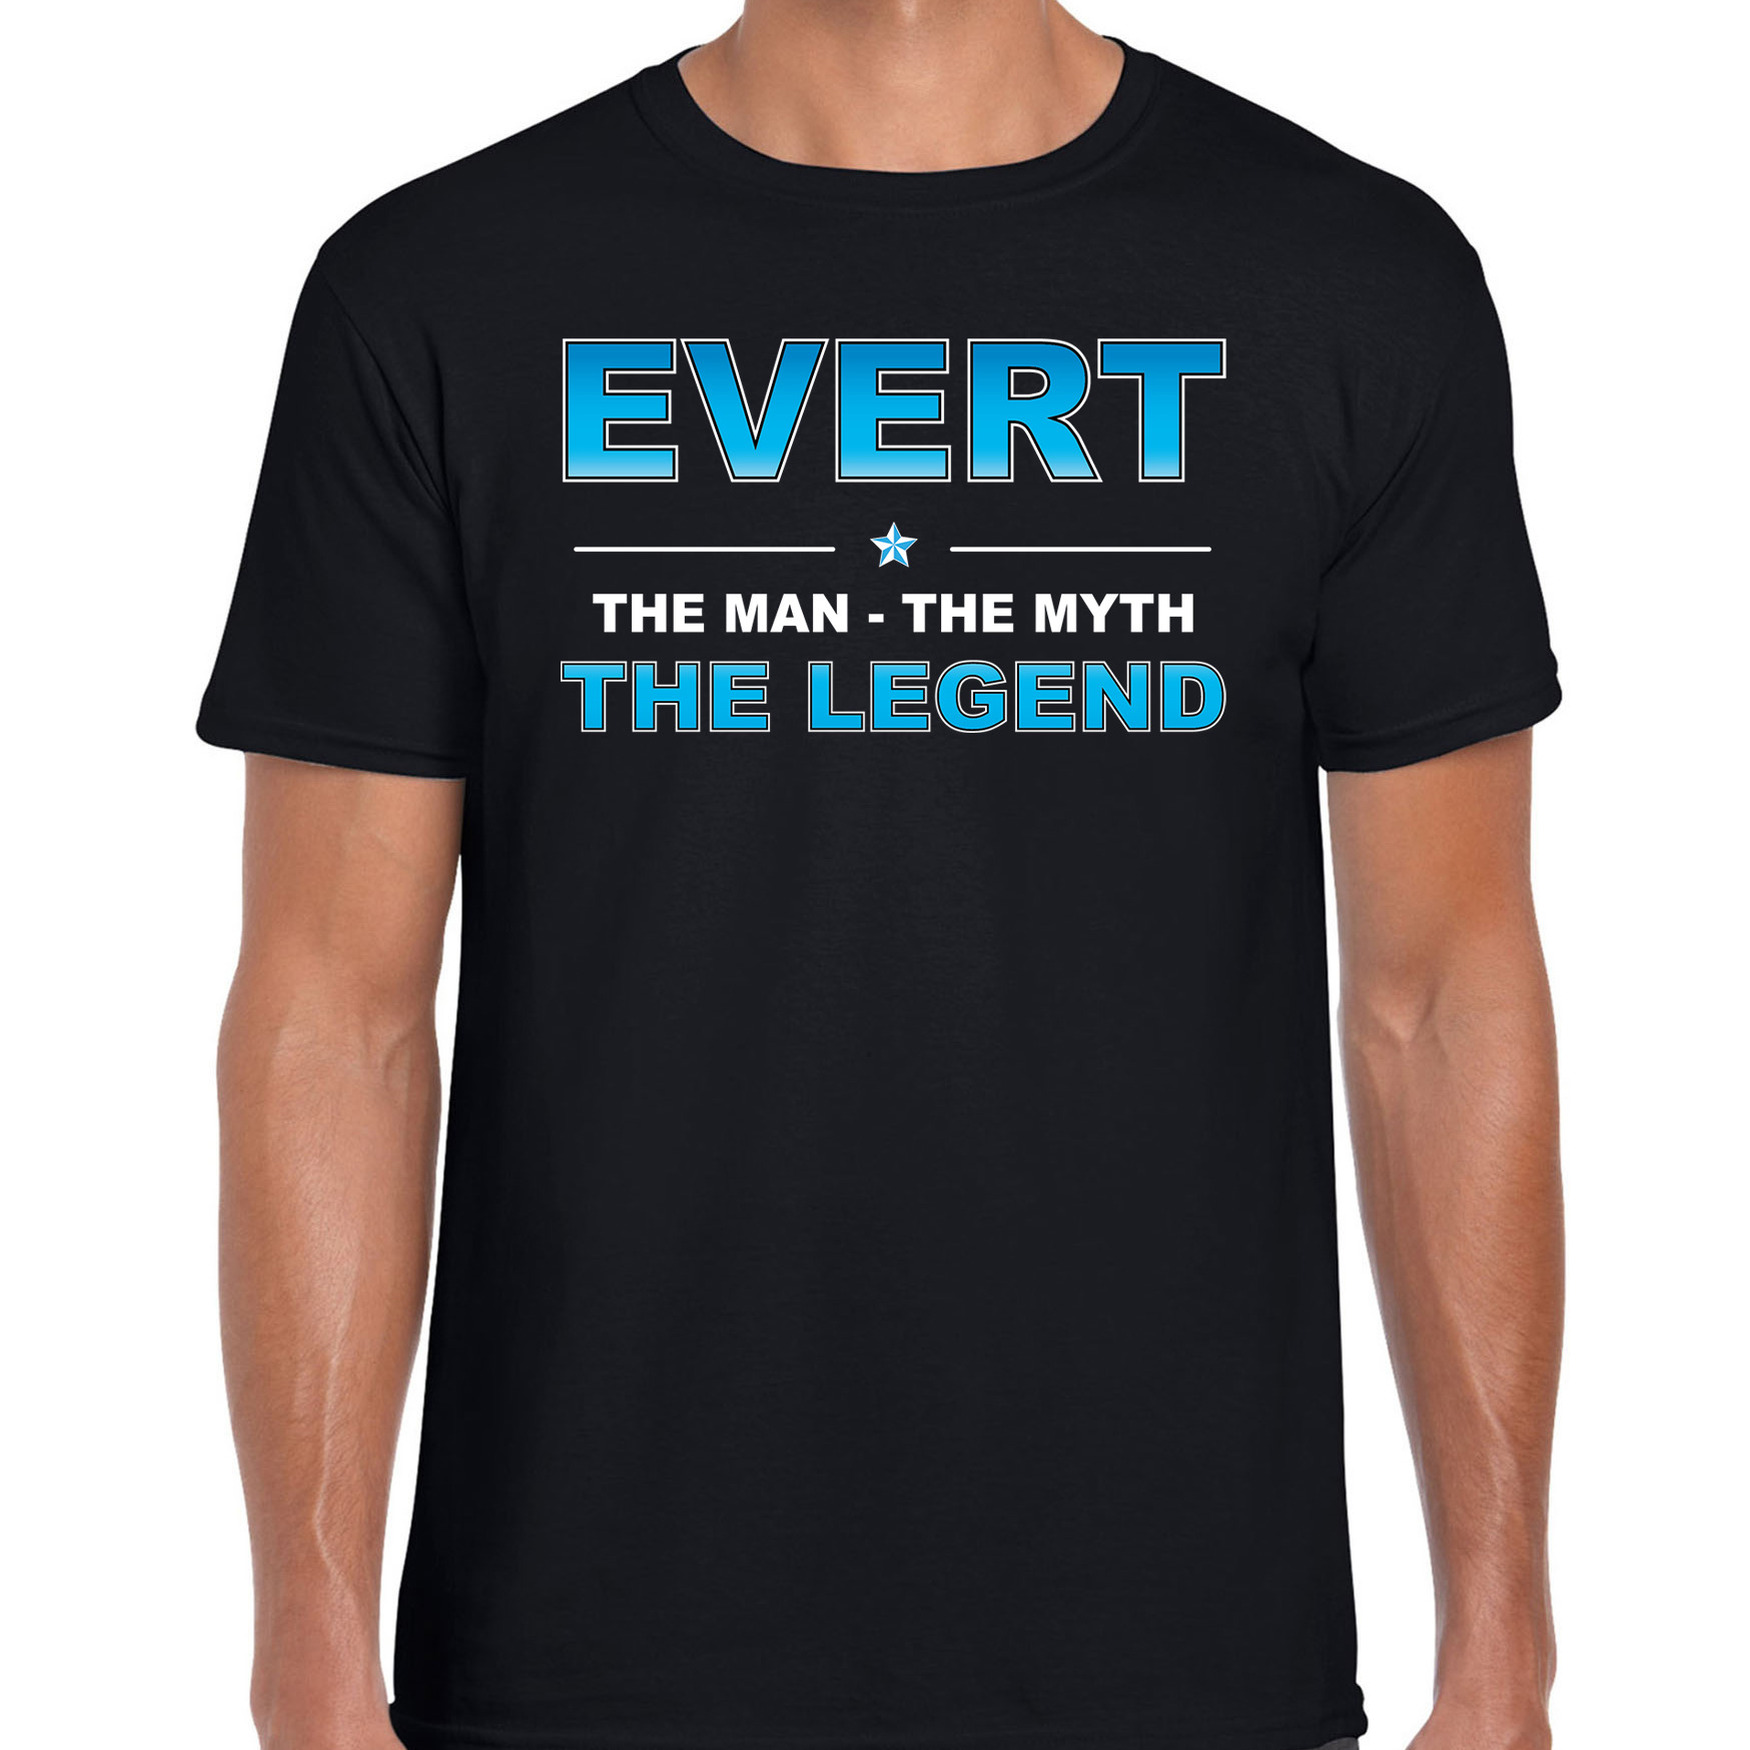 Naam cadeau t-shirt Evert the legend zwart voor heren